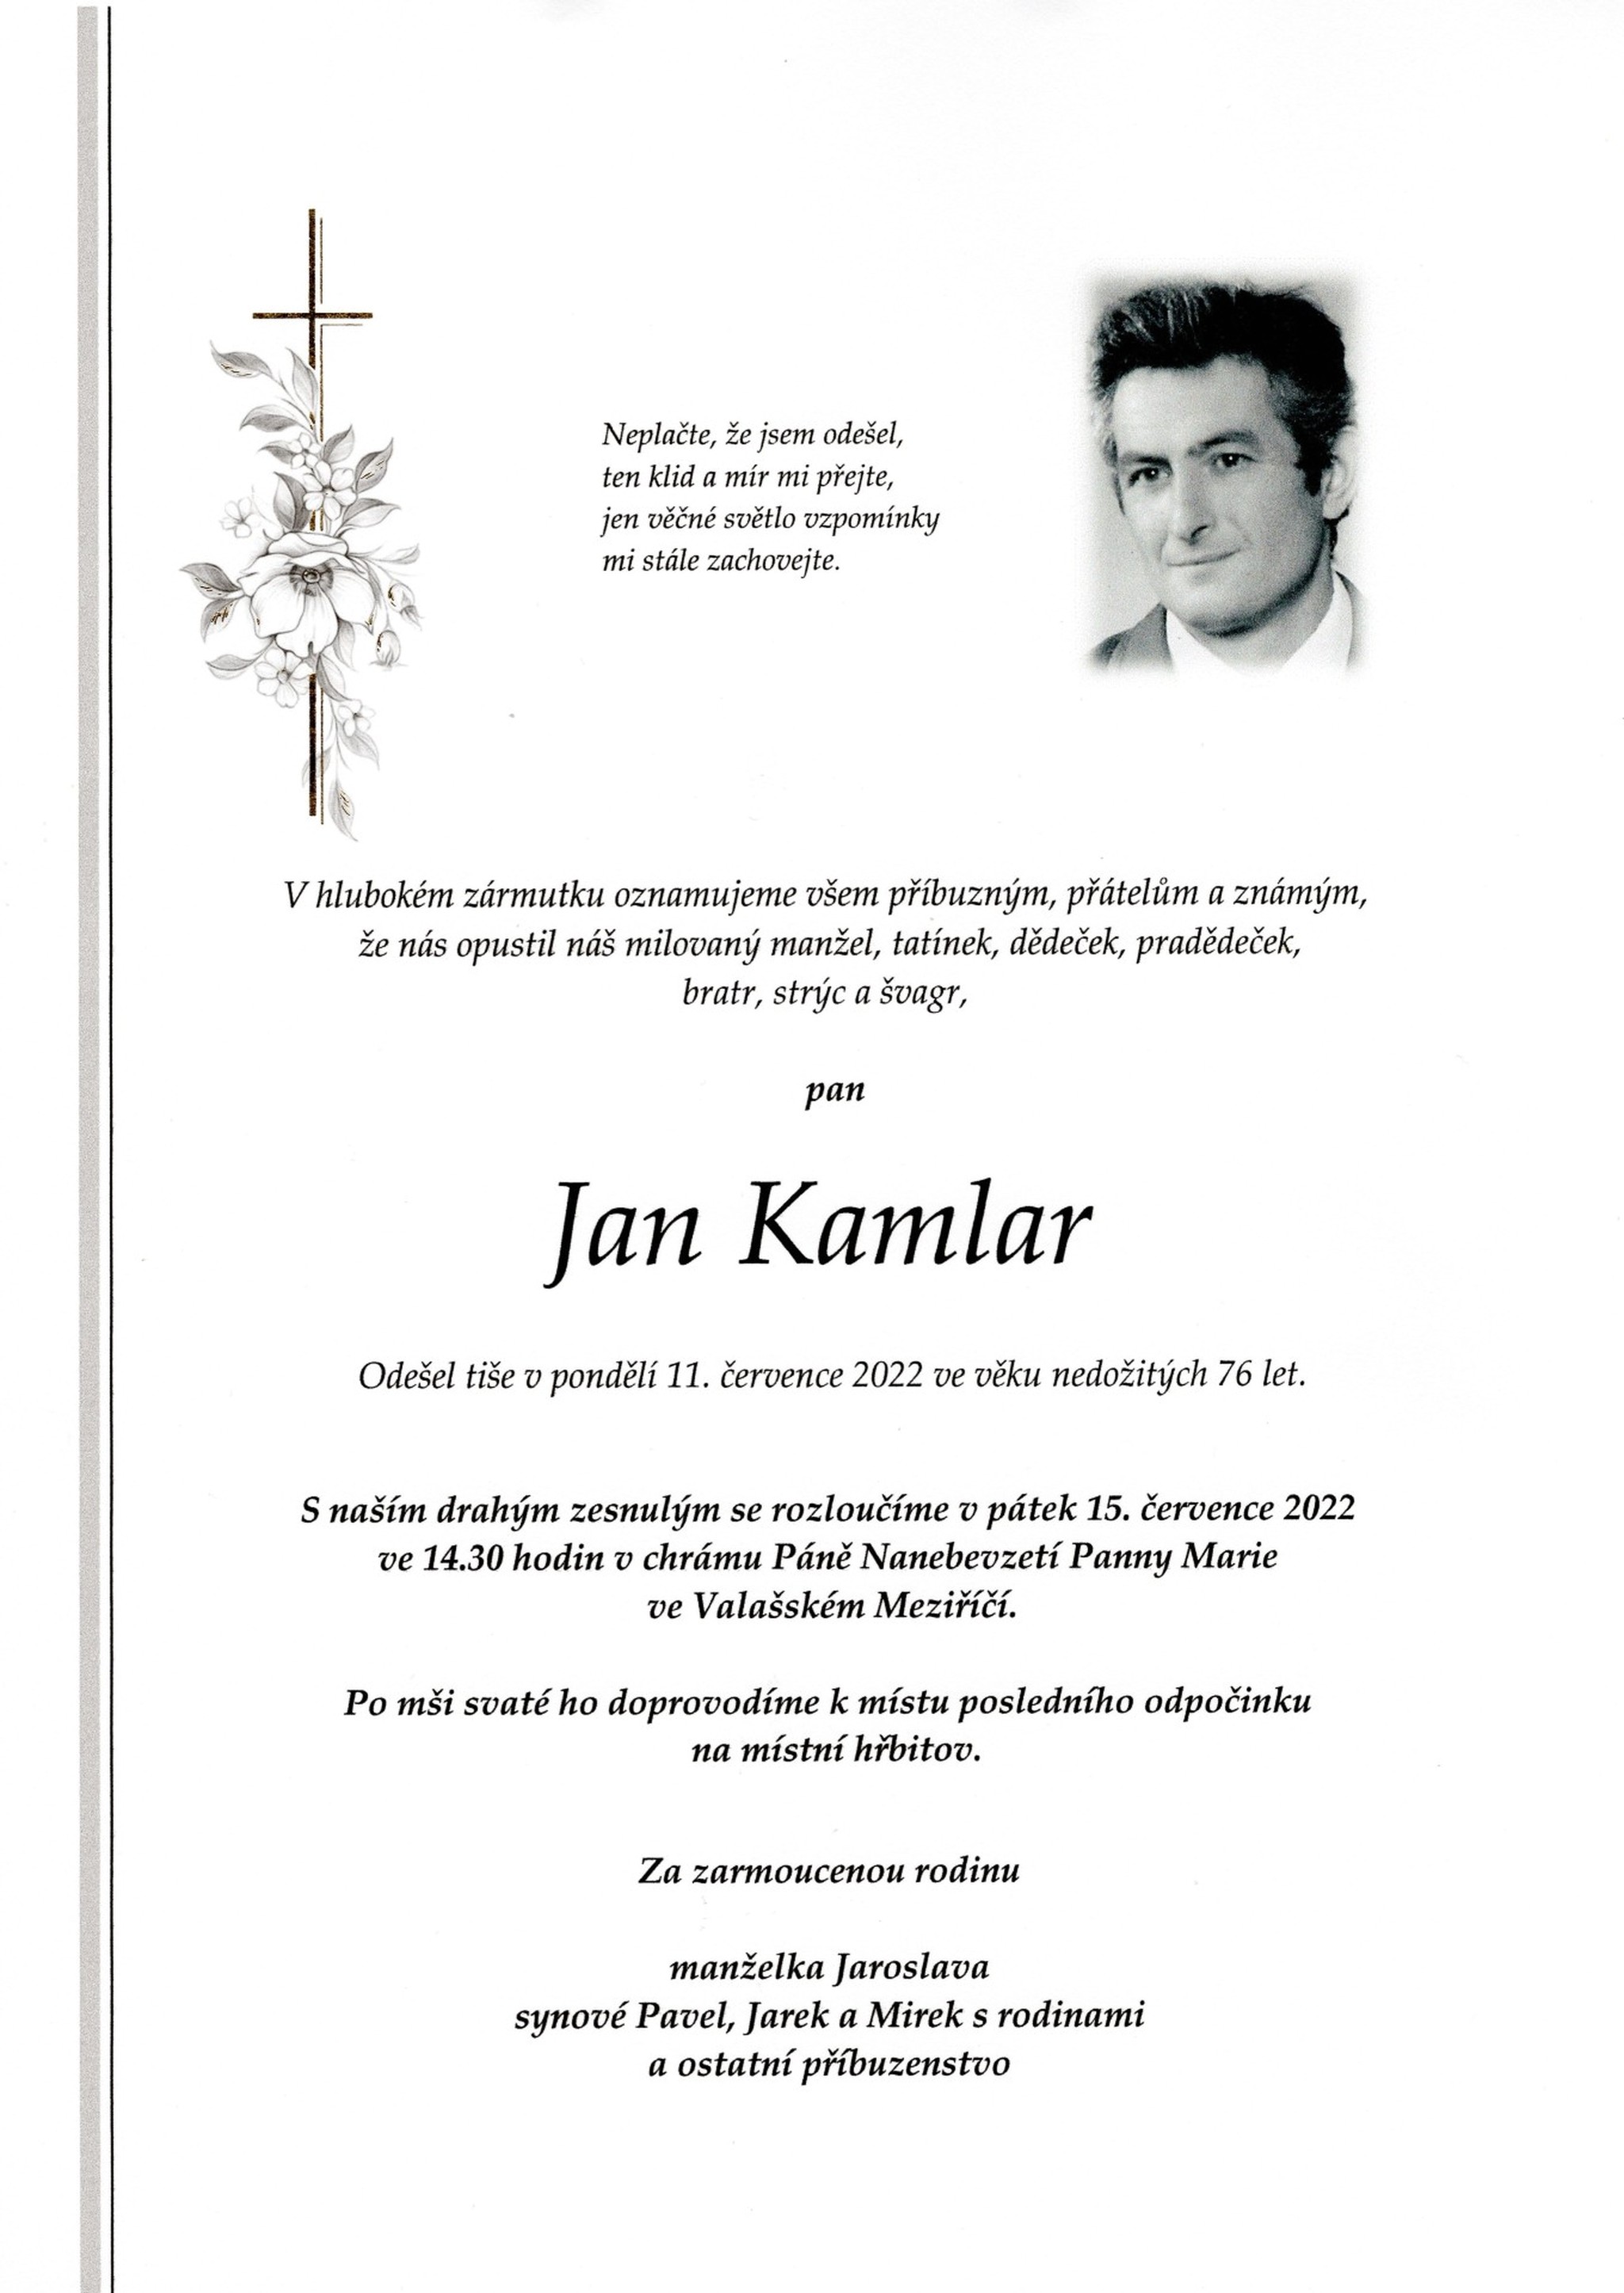 Jan Kamlar